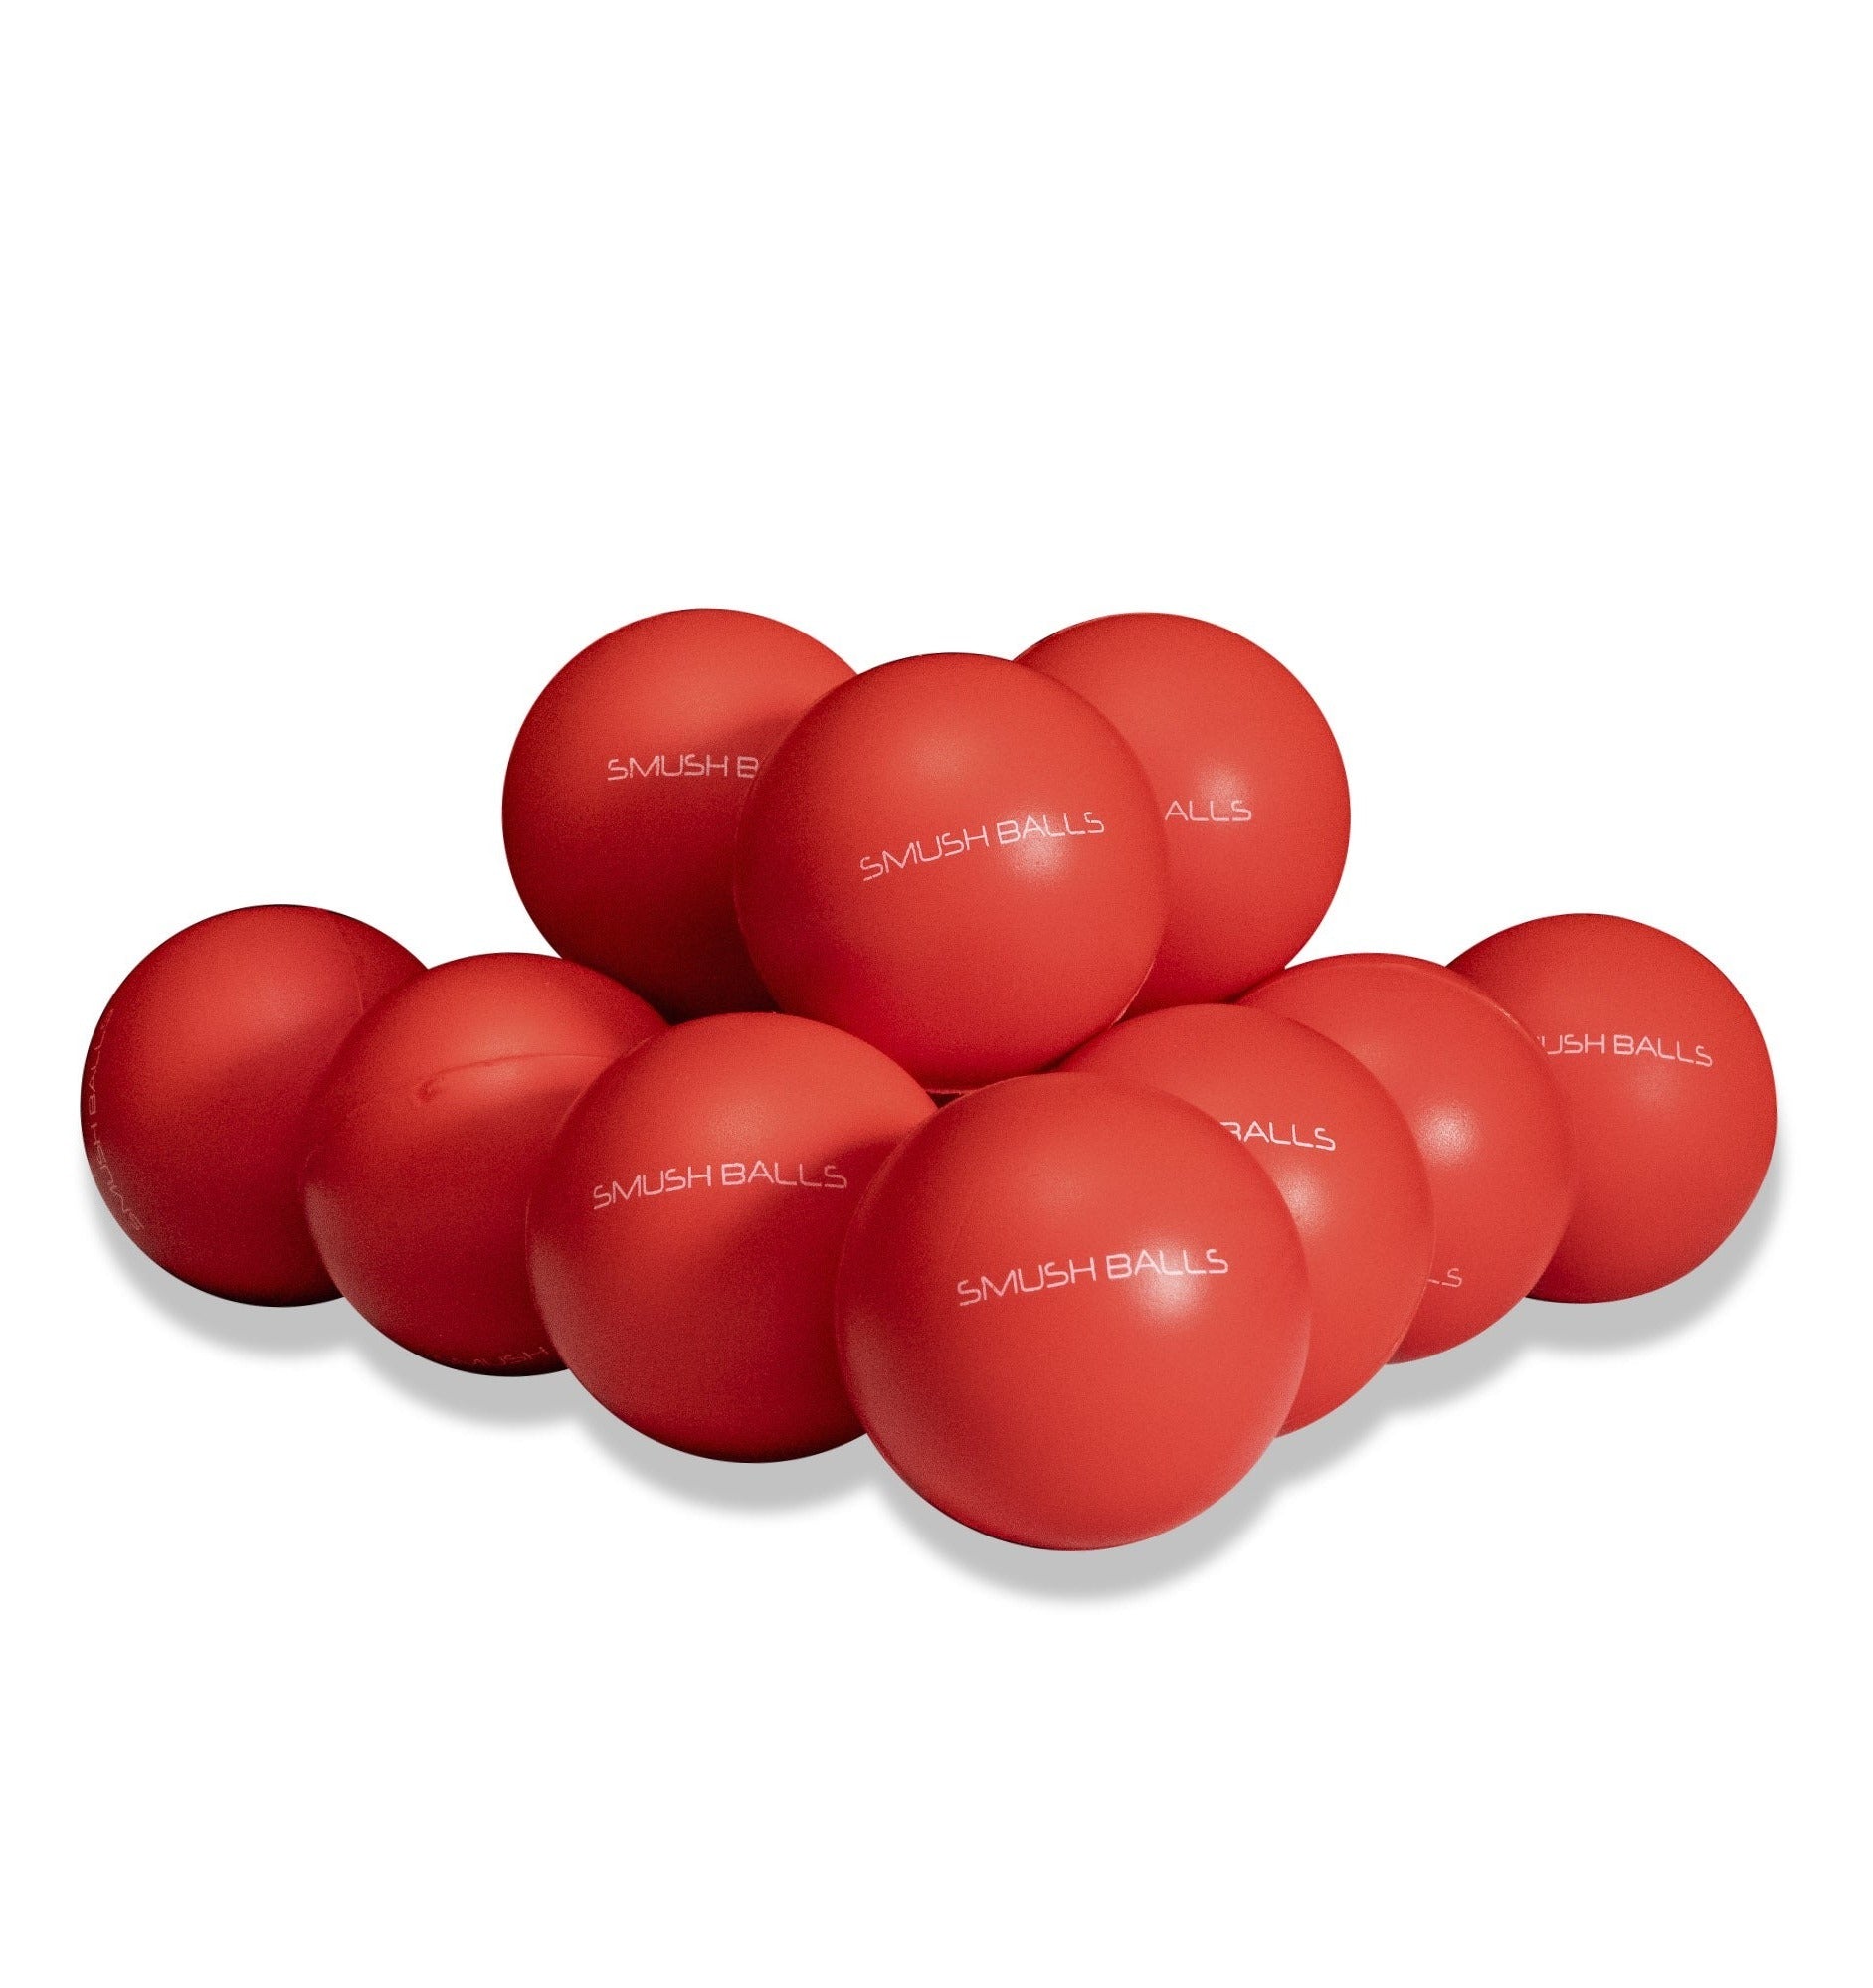 Red Smushballs